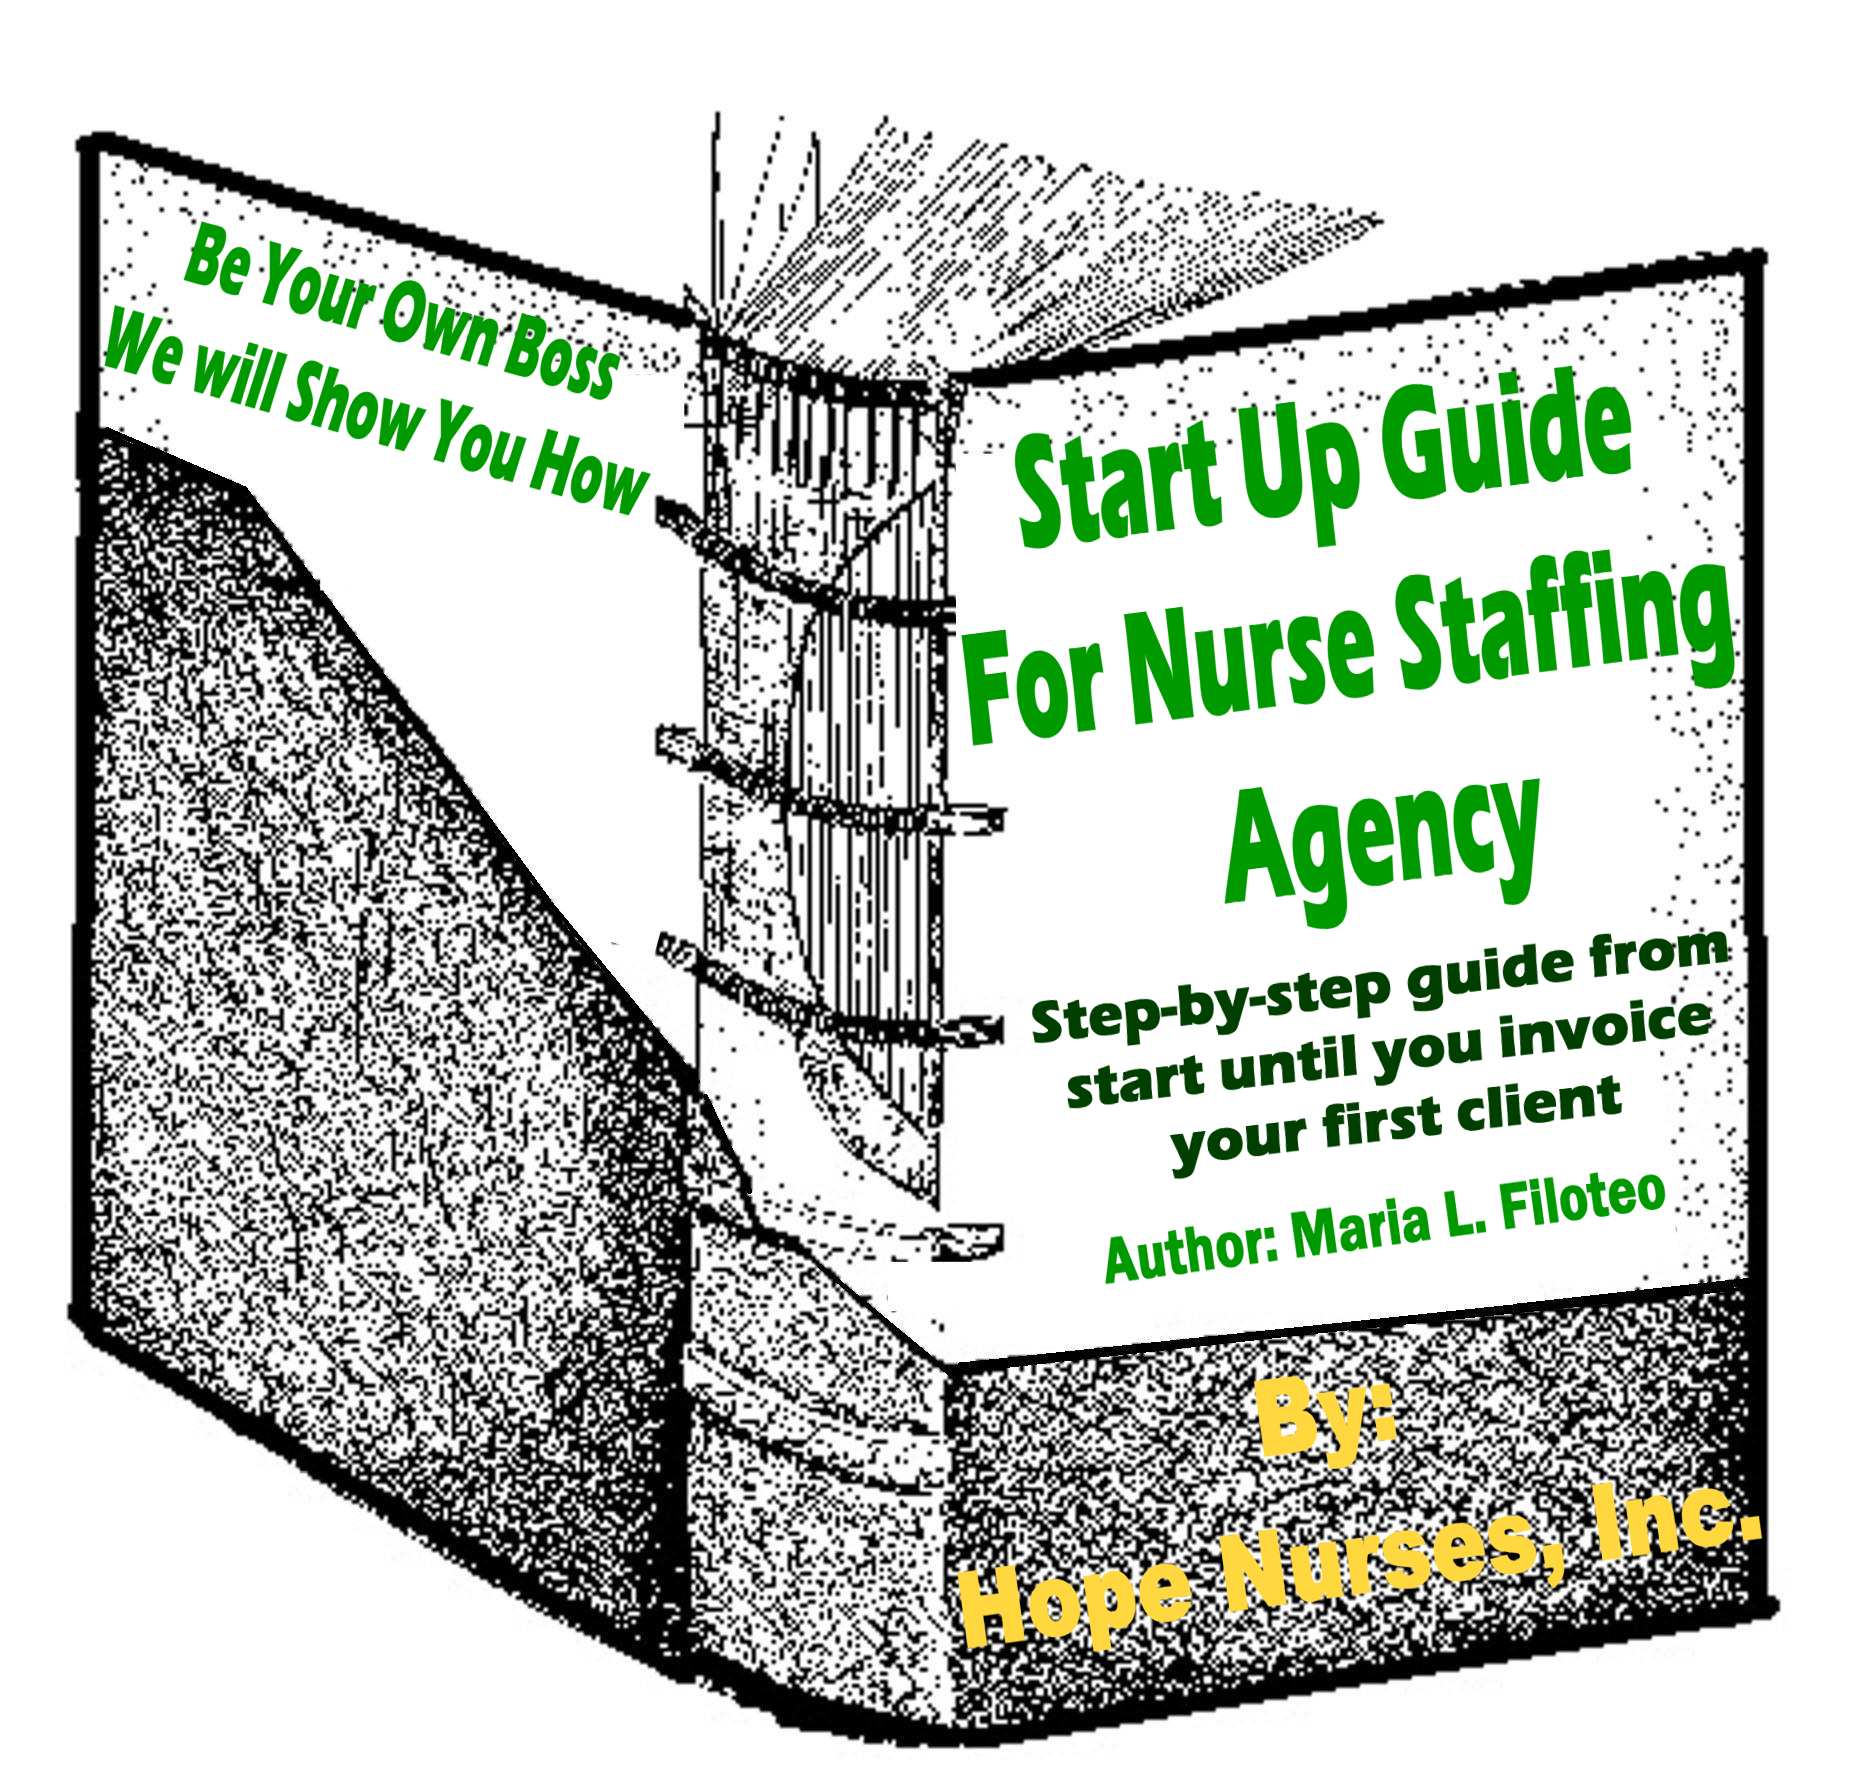 Volume - Nurse Staffing Agency